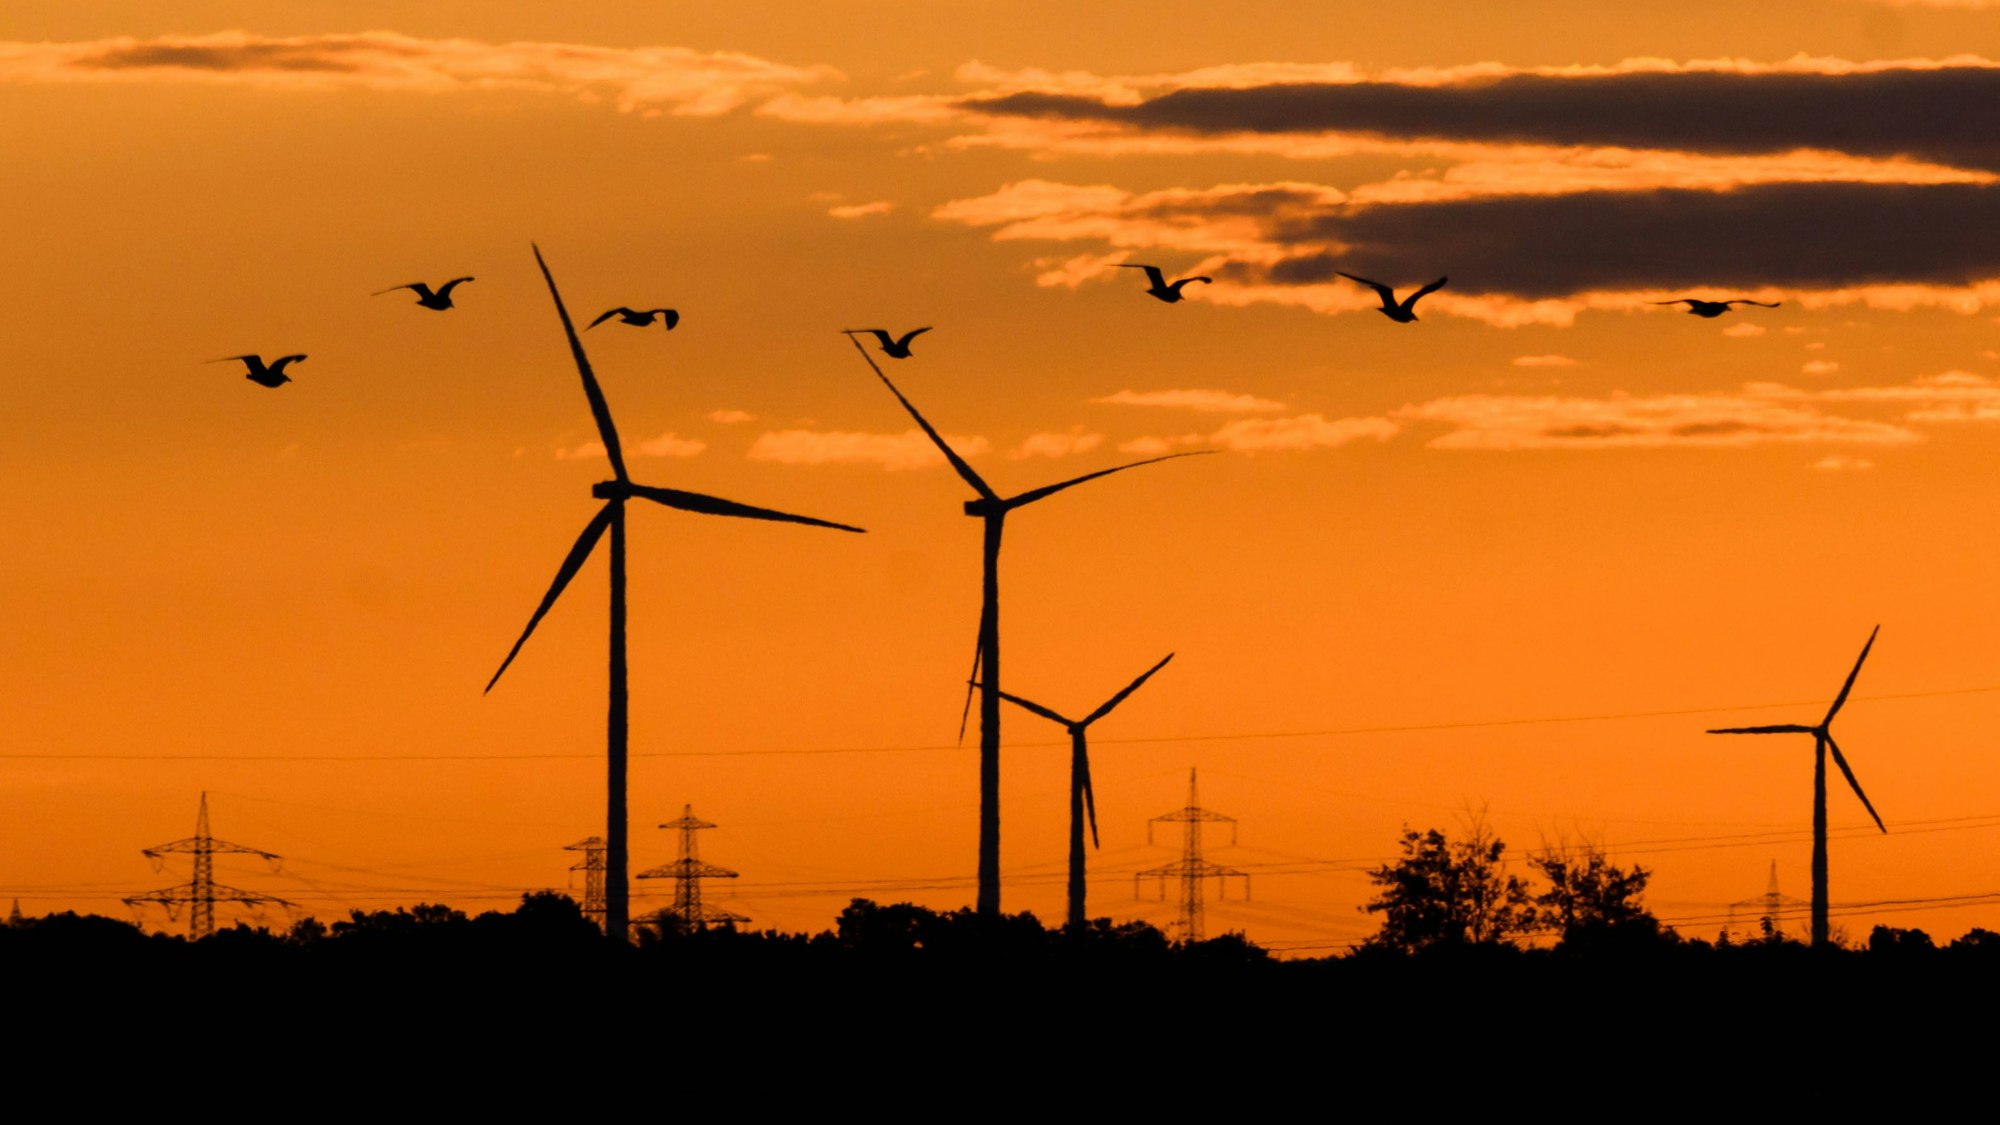 Vögel fliegen bei Sonnenaufgang an Windkraftanlagen vorbei.